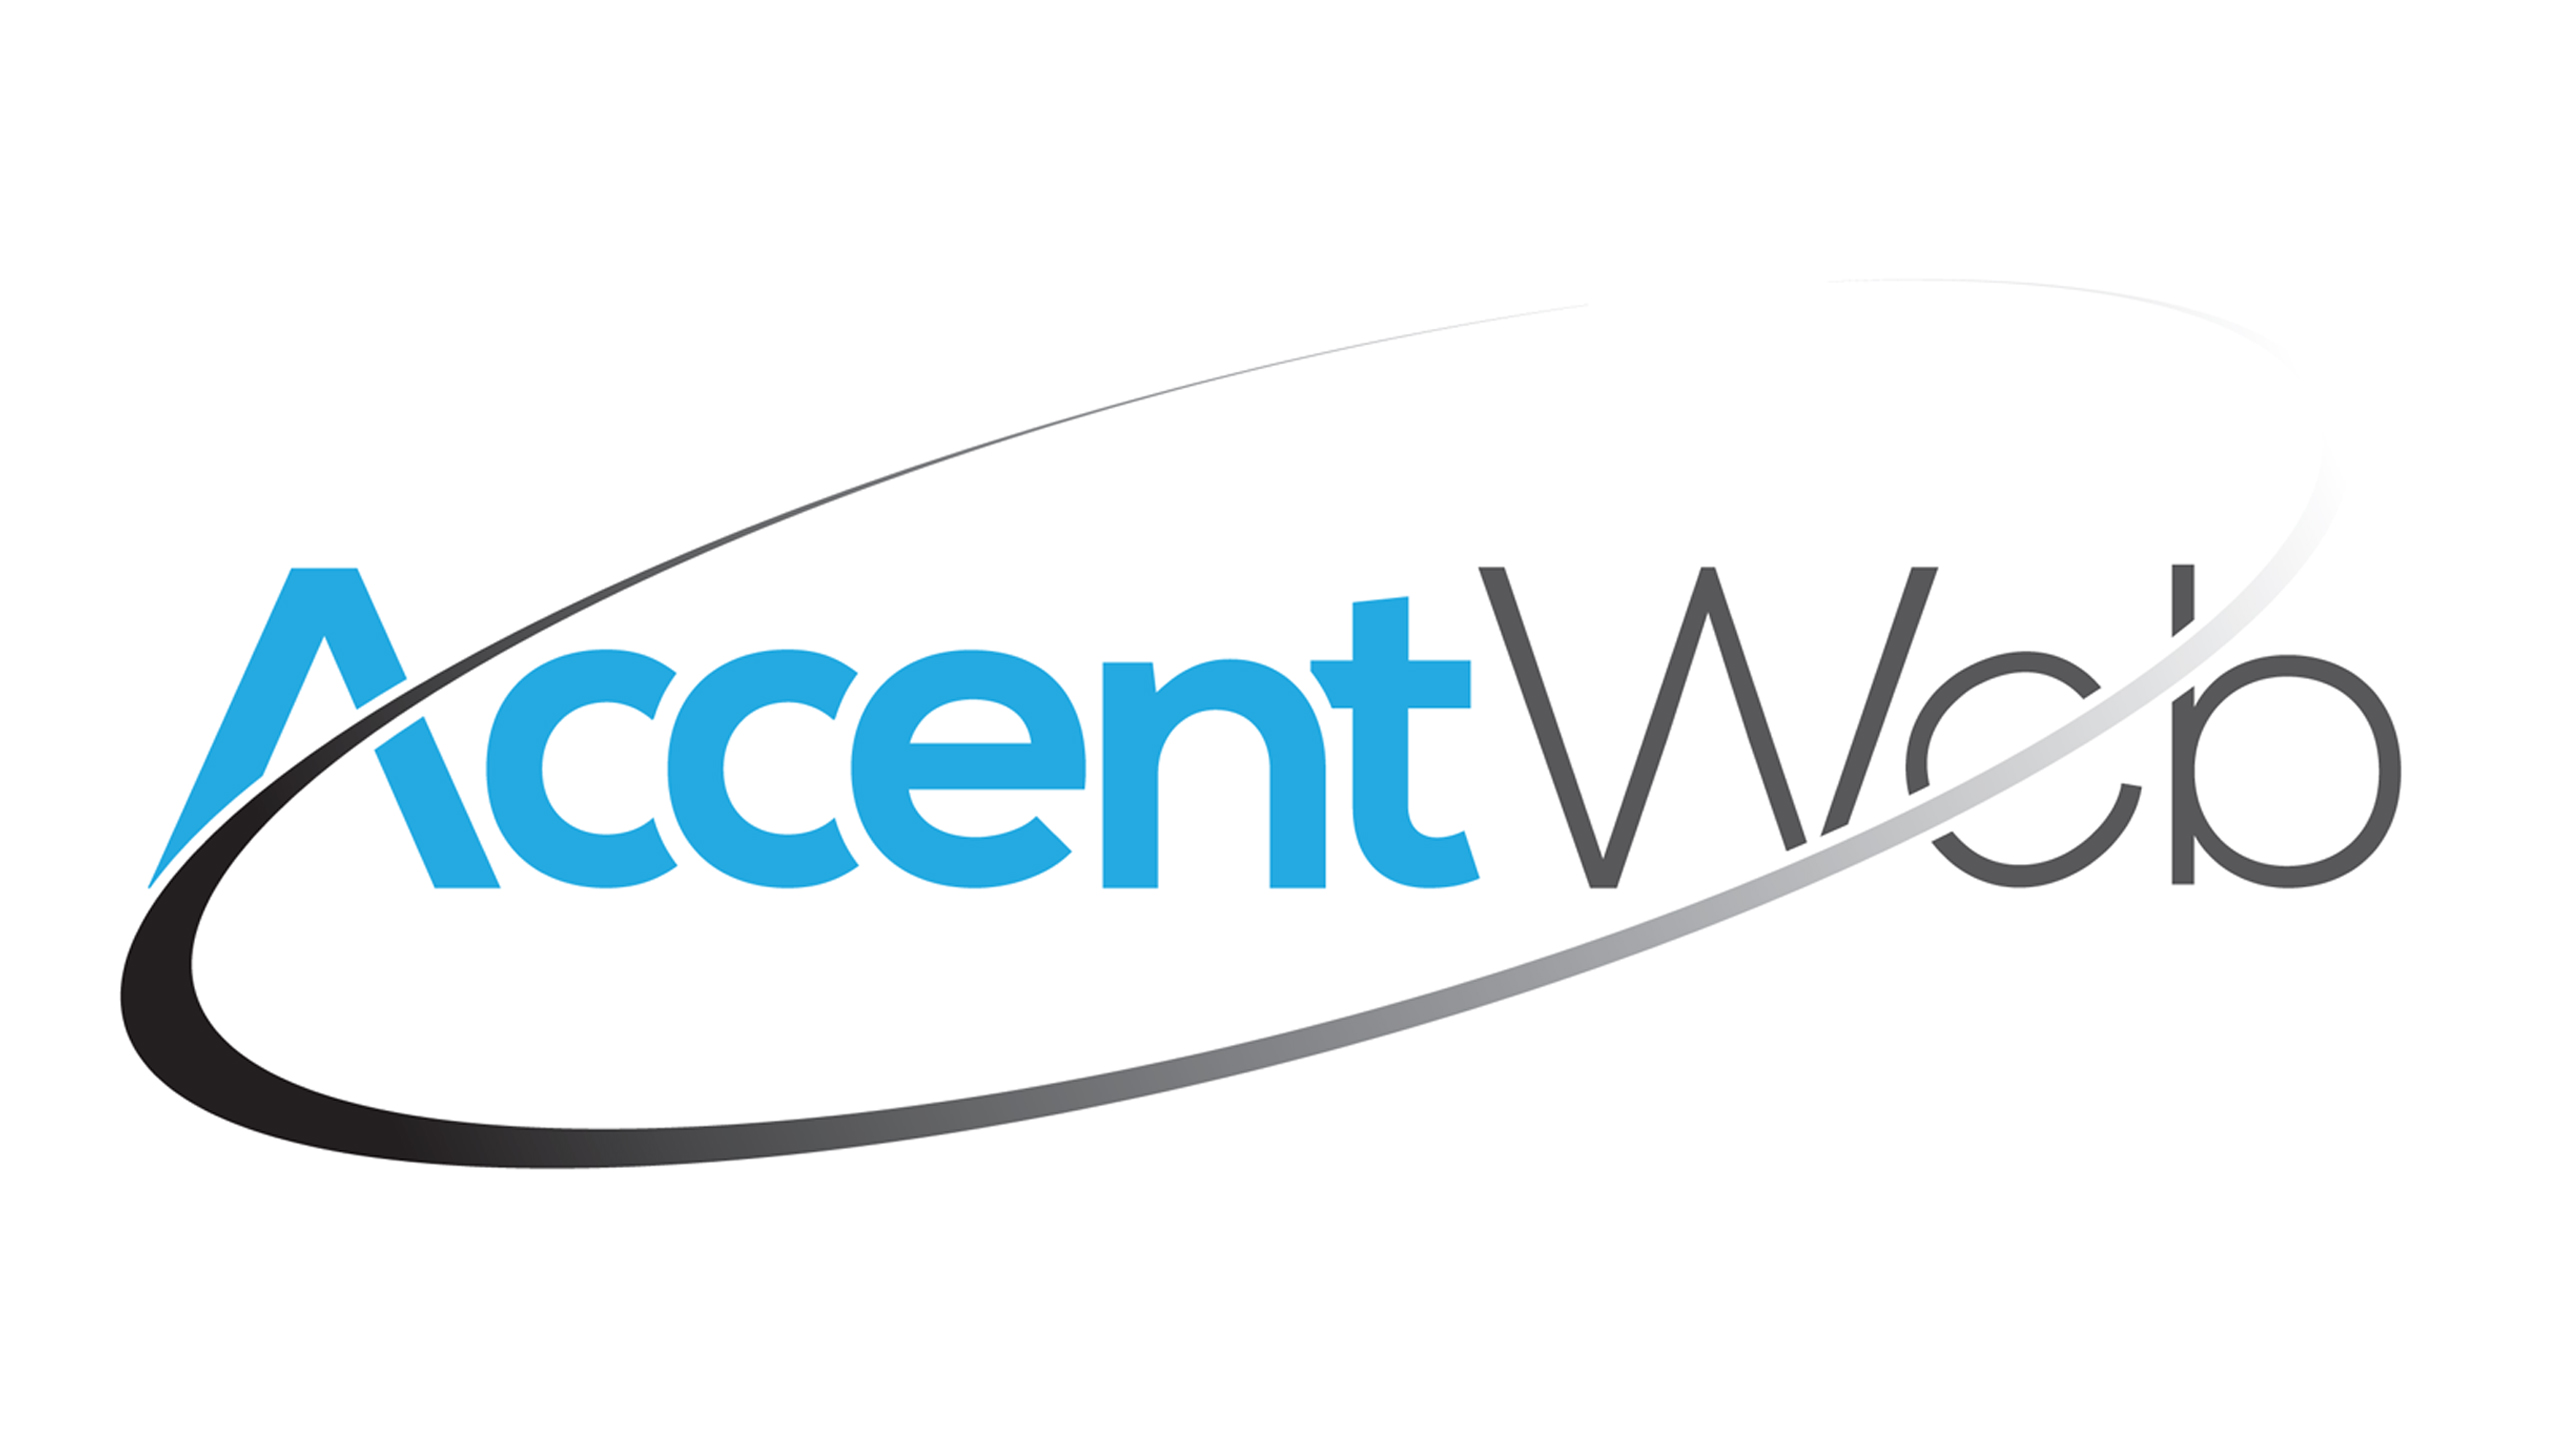 Accentweb Logo